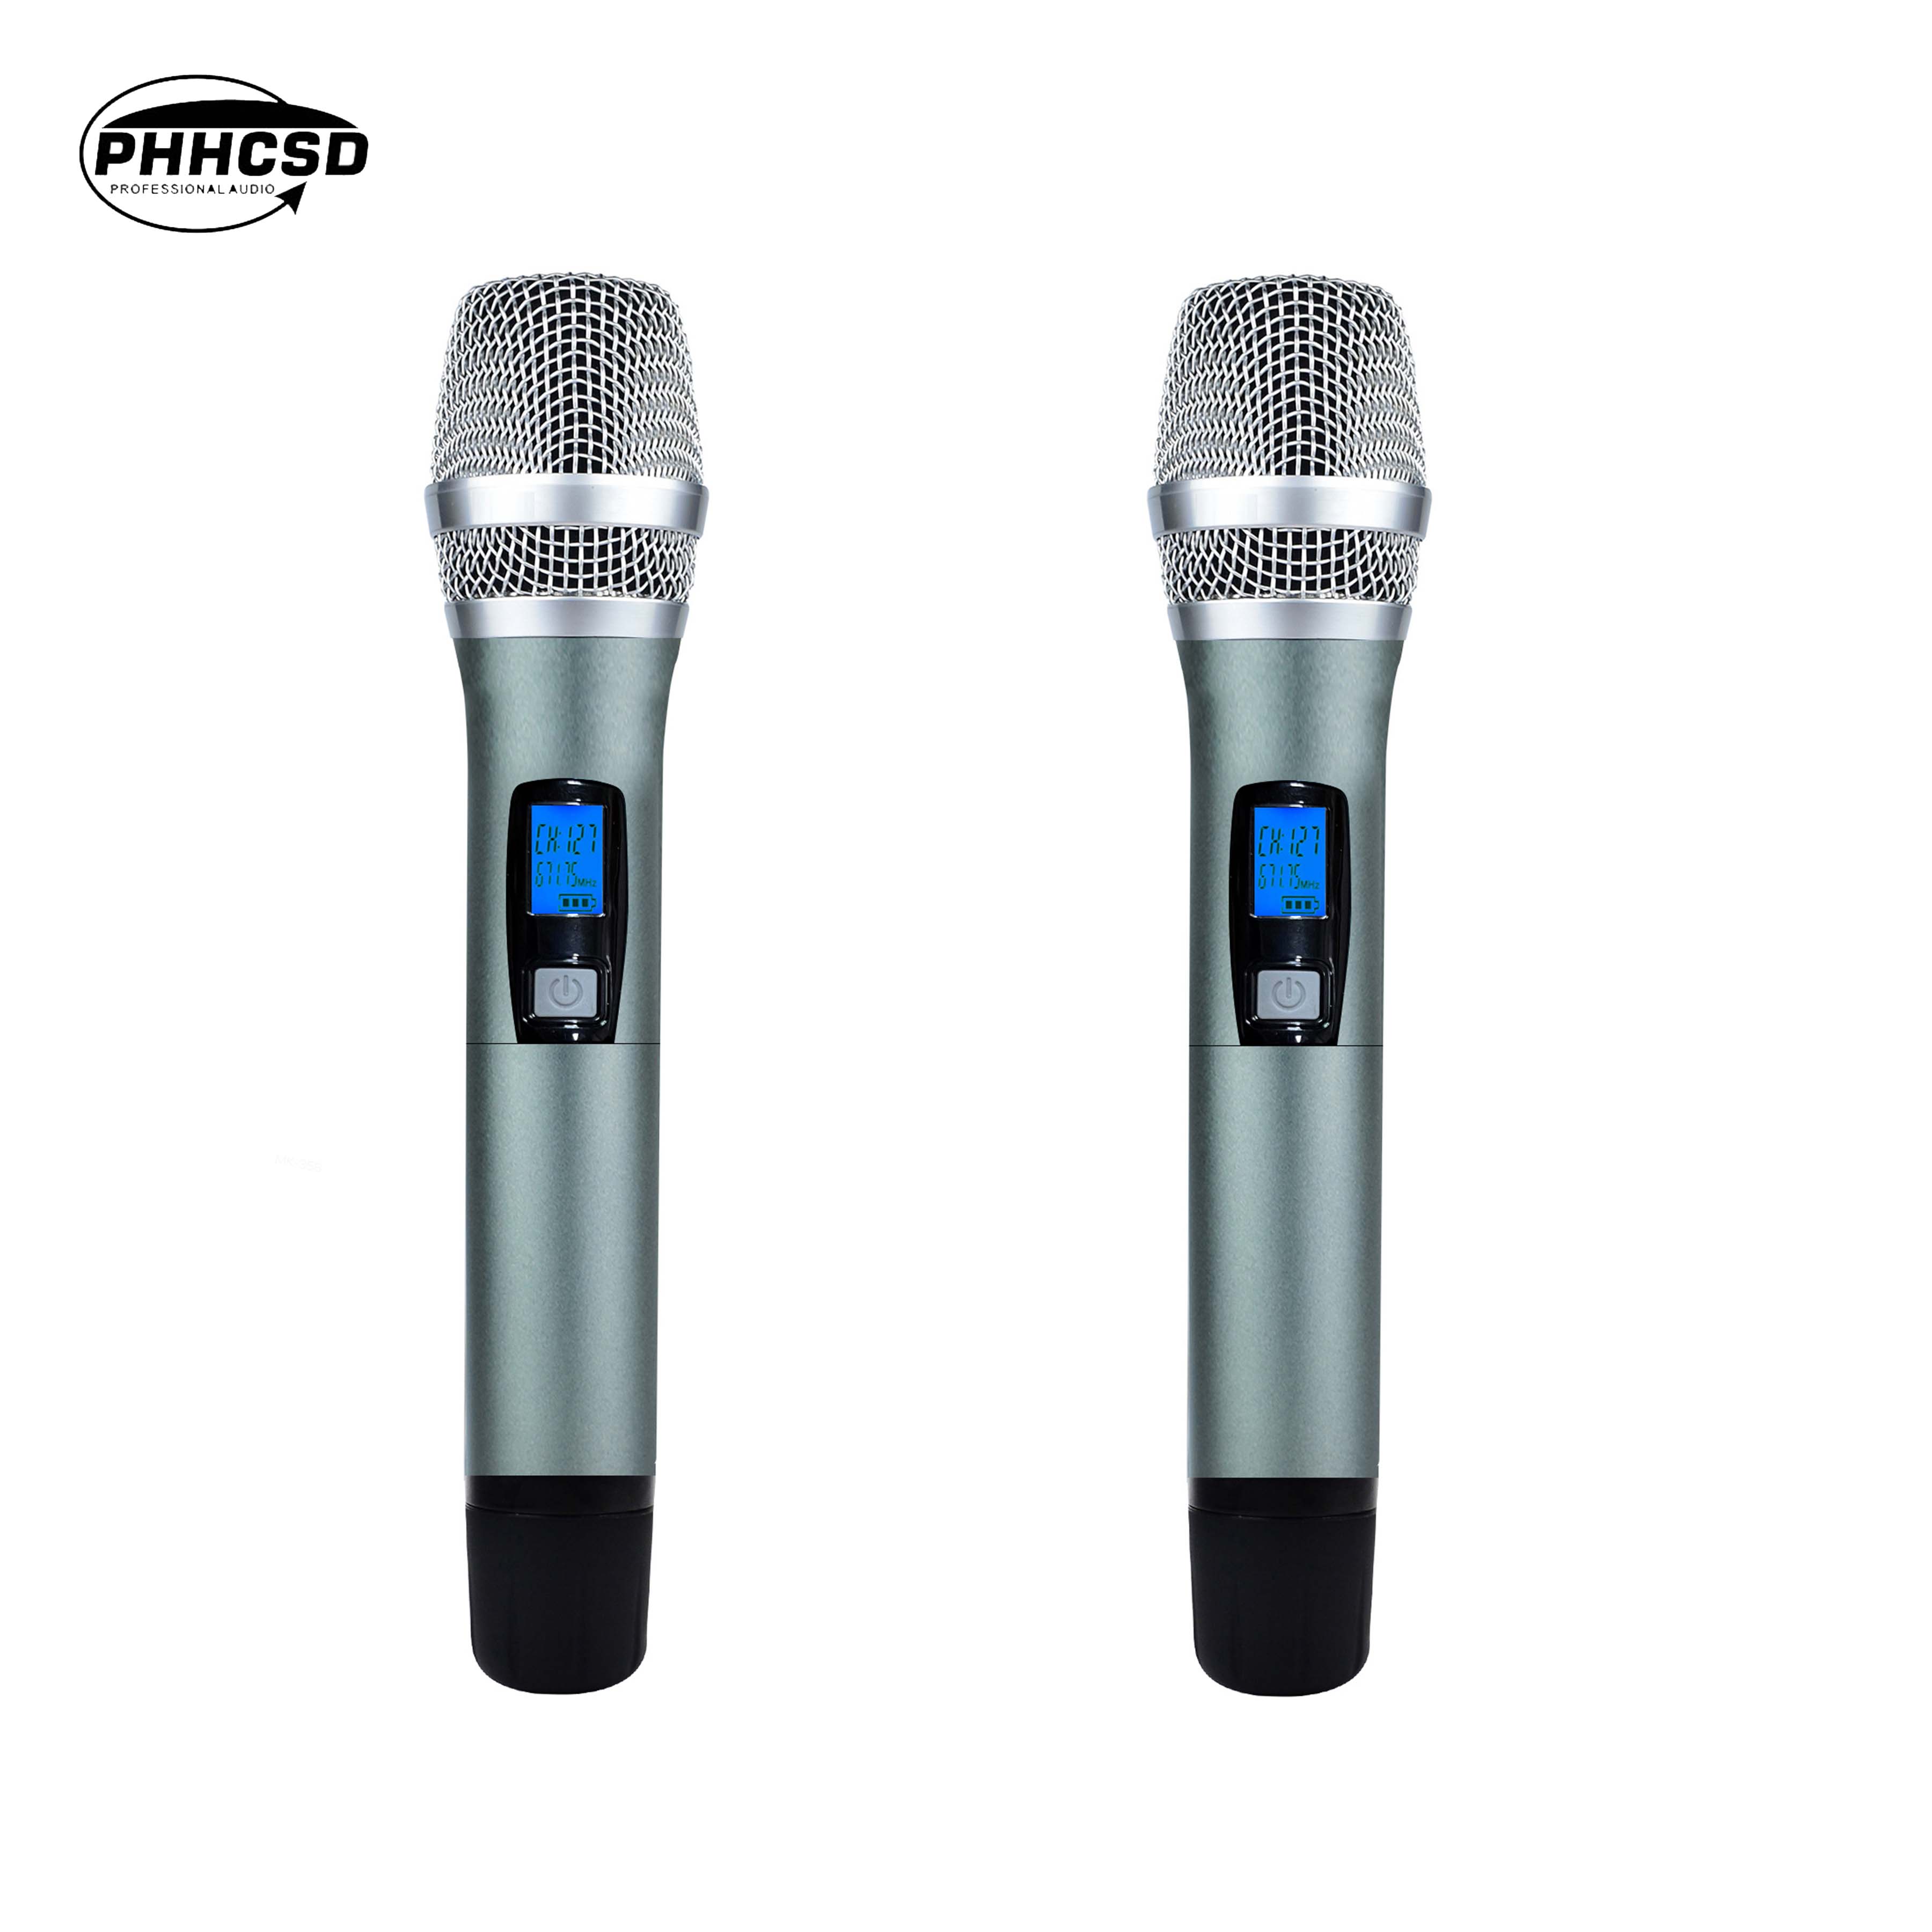 MK358 UHF wireless microphone